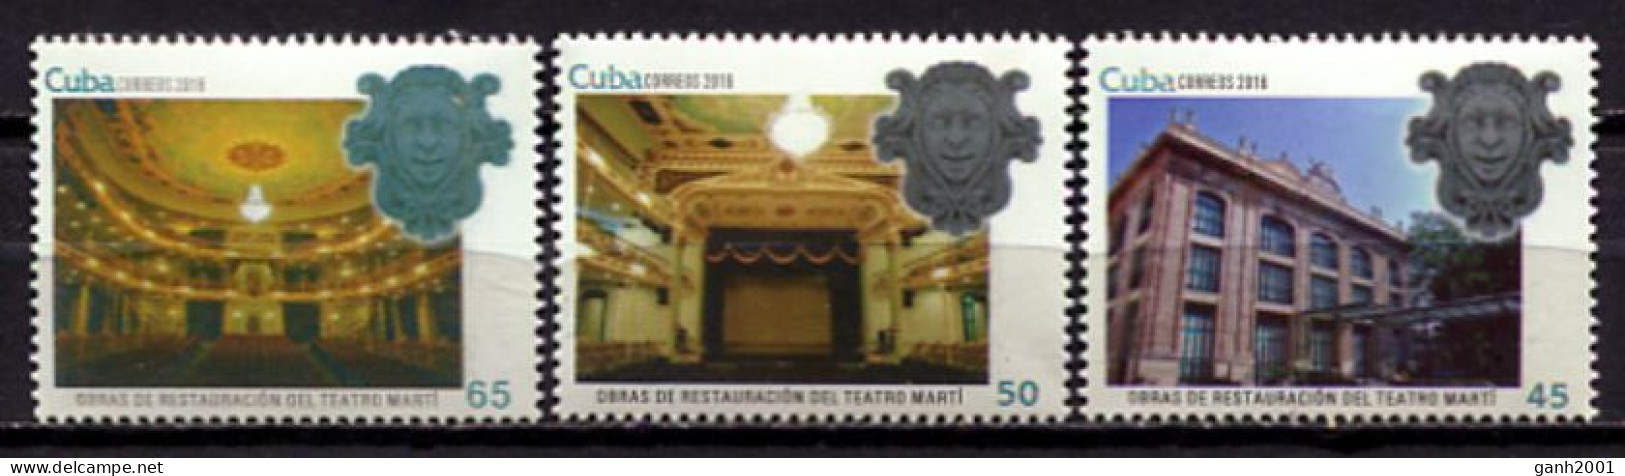 Cuba 2016 / Theatre Jose Marti MNH Teatro Theater / Cu1627  5-20 - Theatre